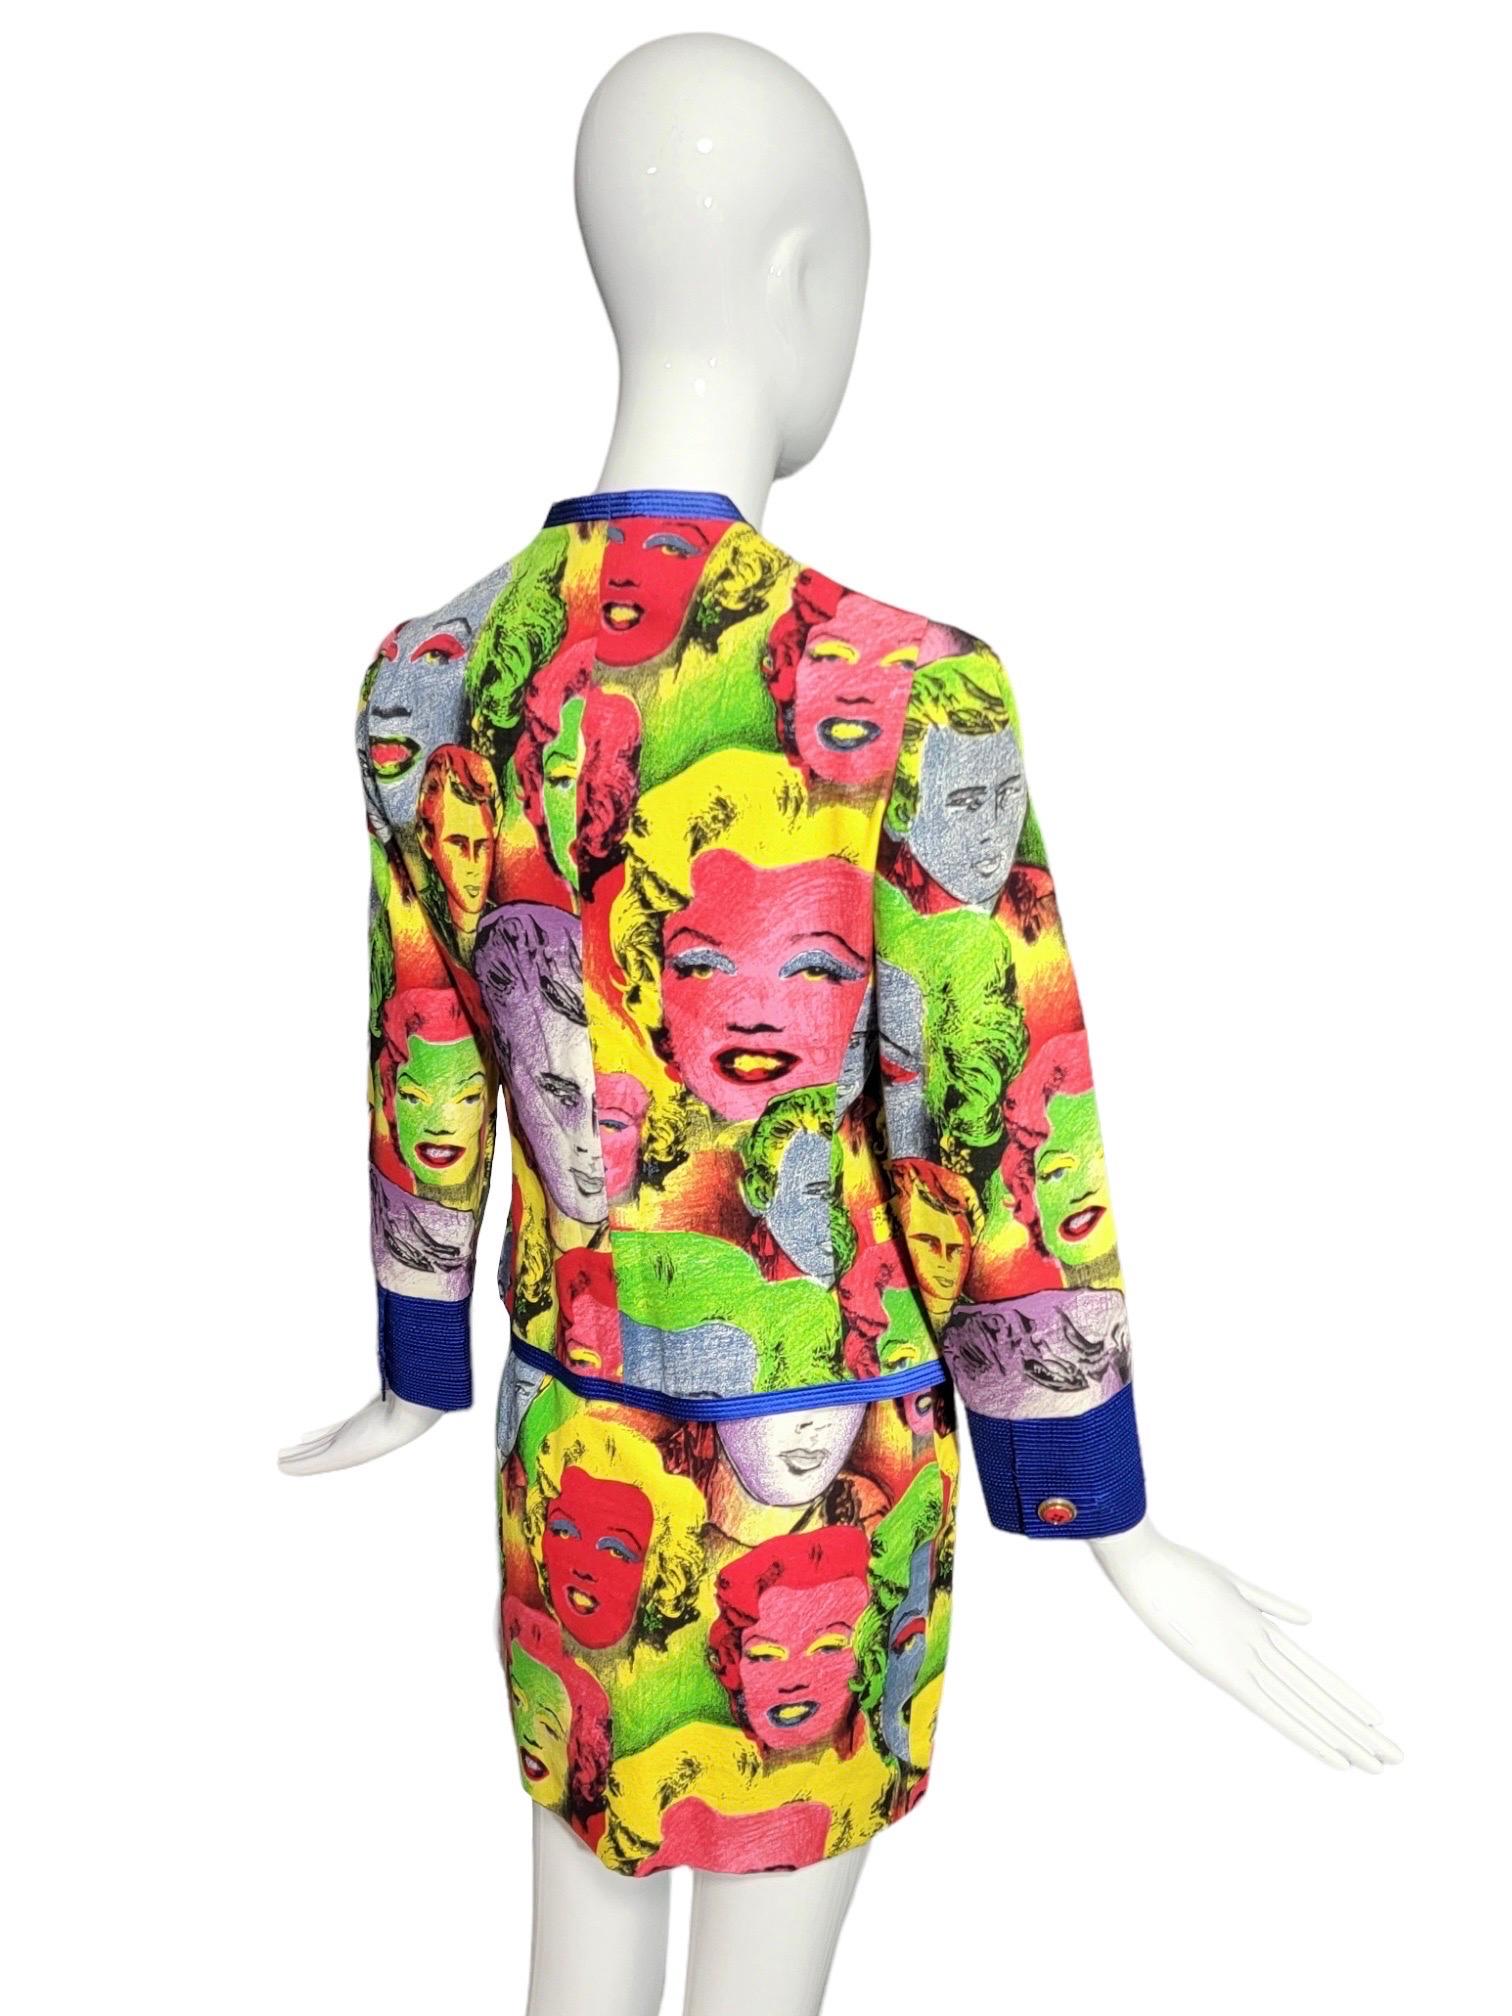  S/S 1991 Gianni Versace Marilyn Monroe Pop Art Warhol Skirt Suit For Sale 8